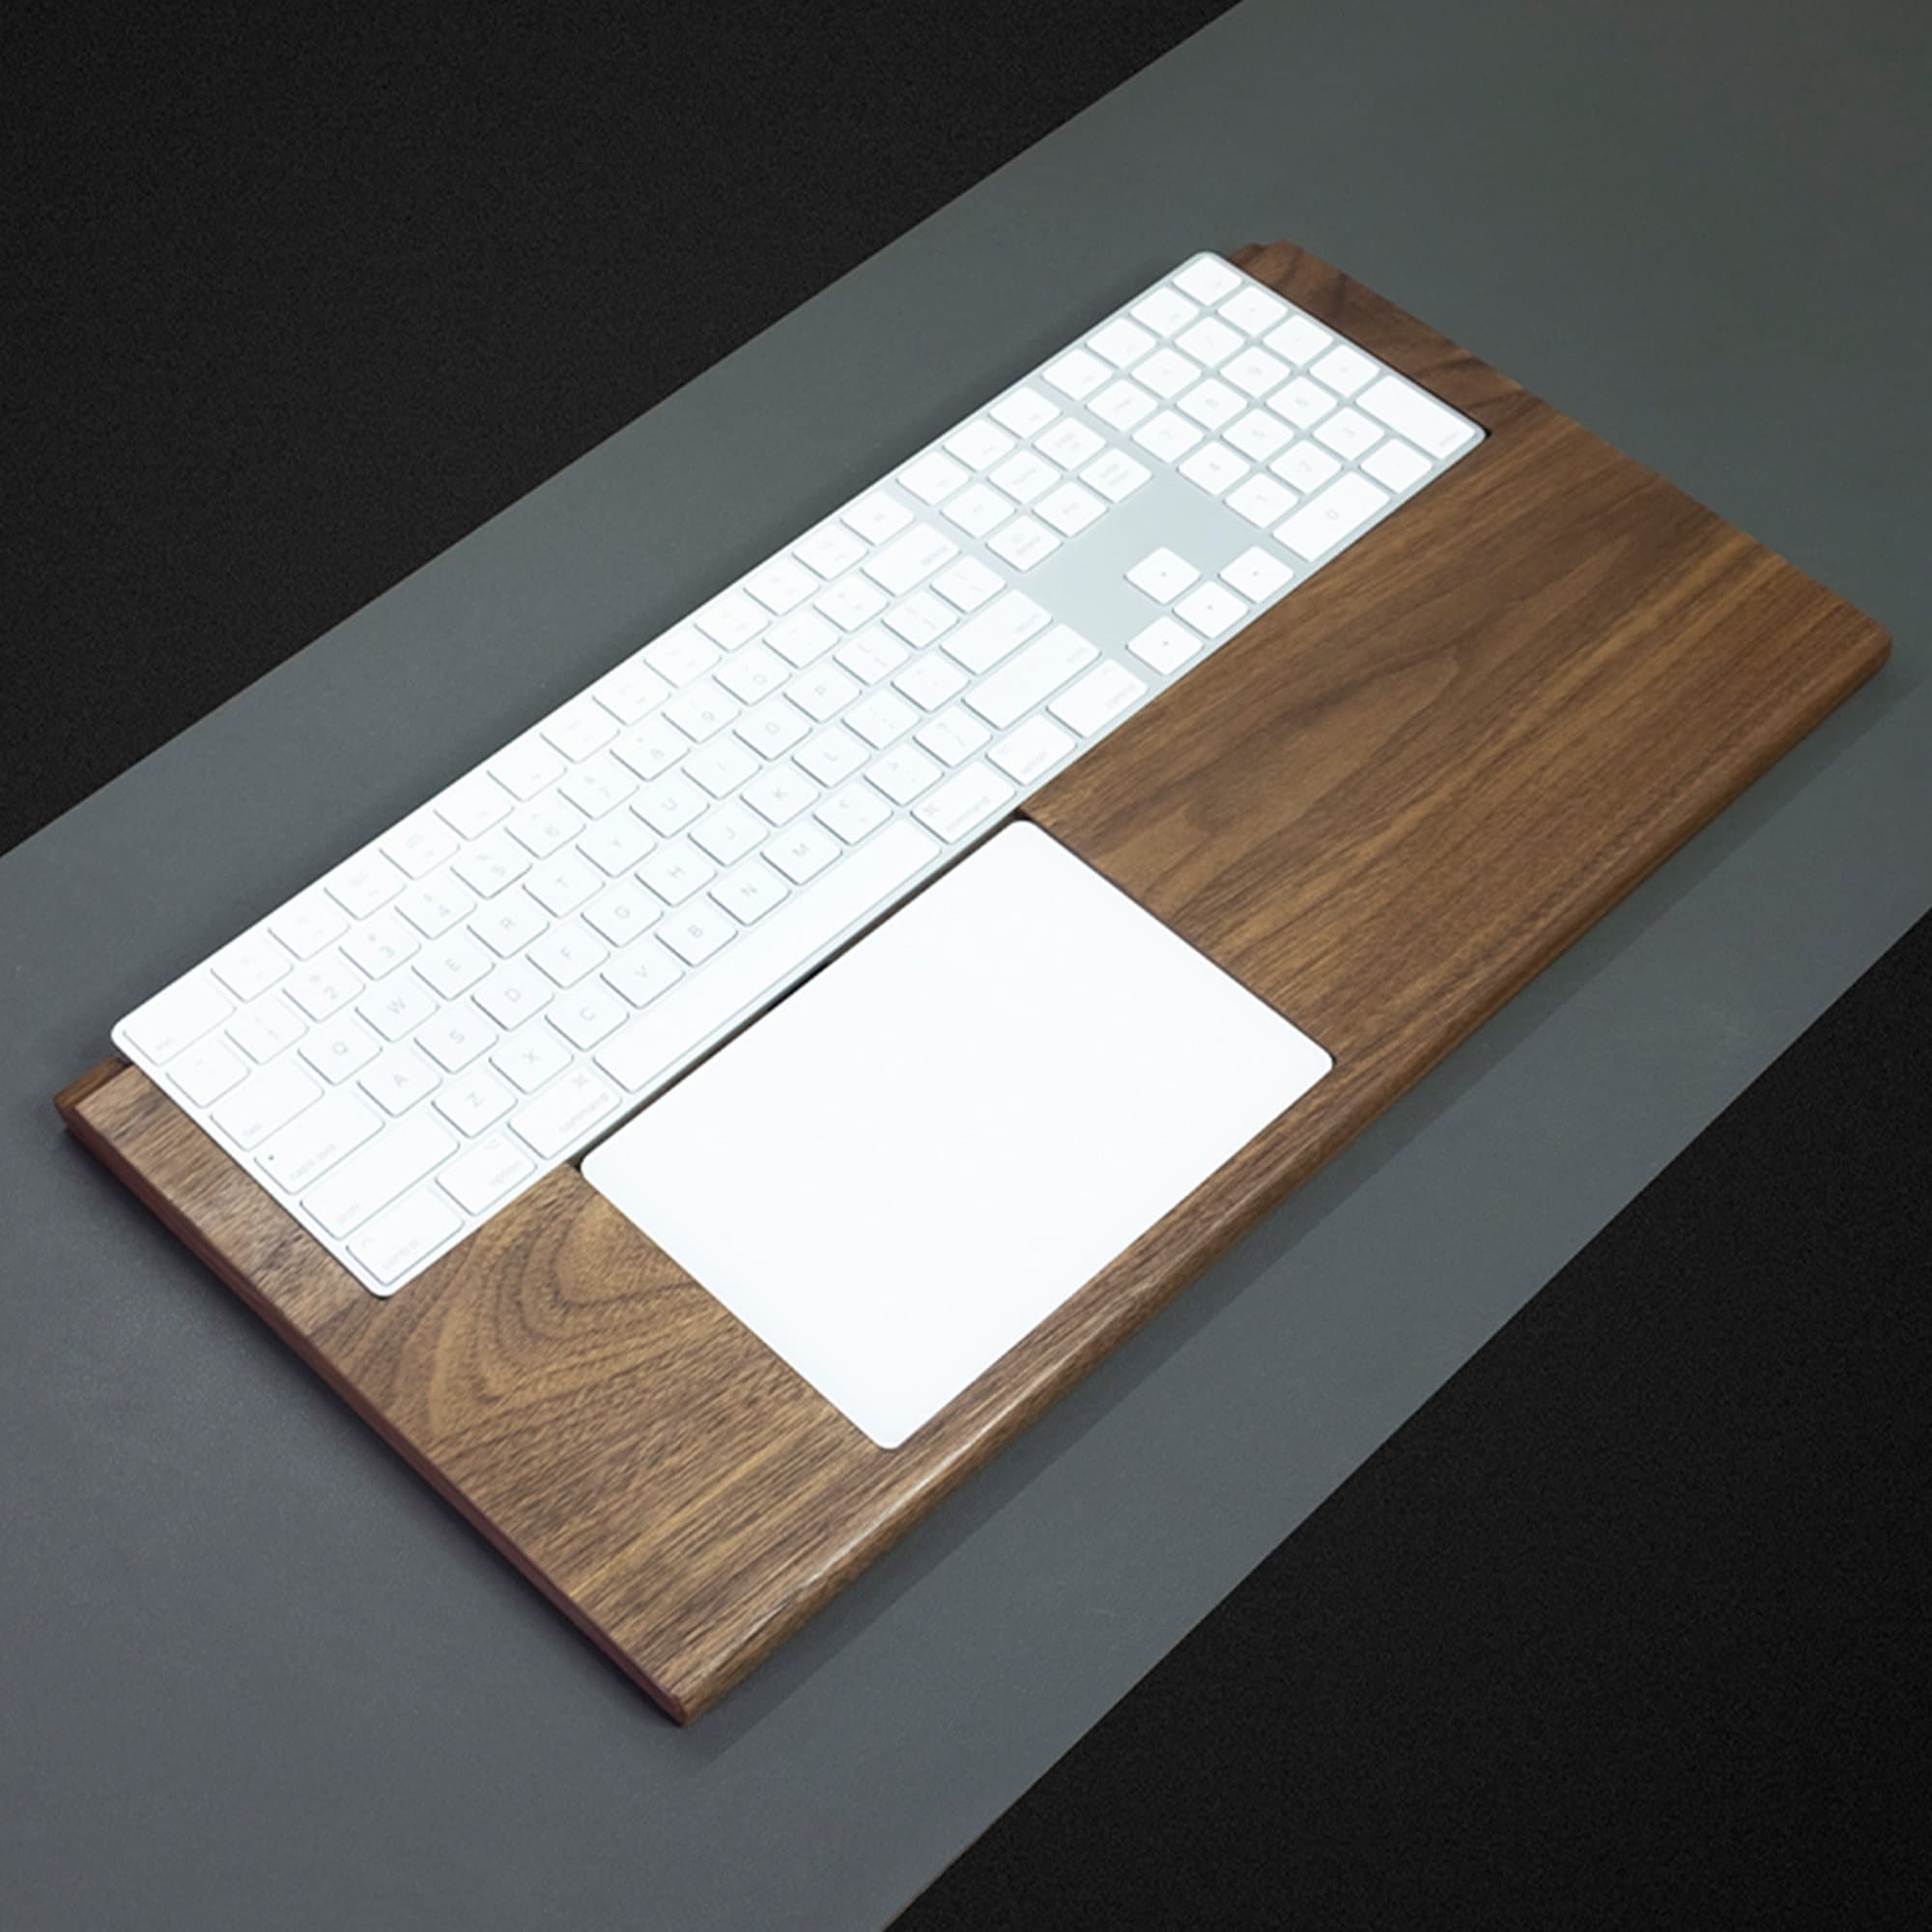 Apple Magic Keyboard Wood Walnut Stand Extended, Magic Trackpad